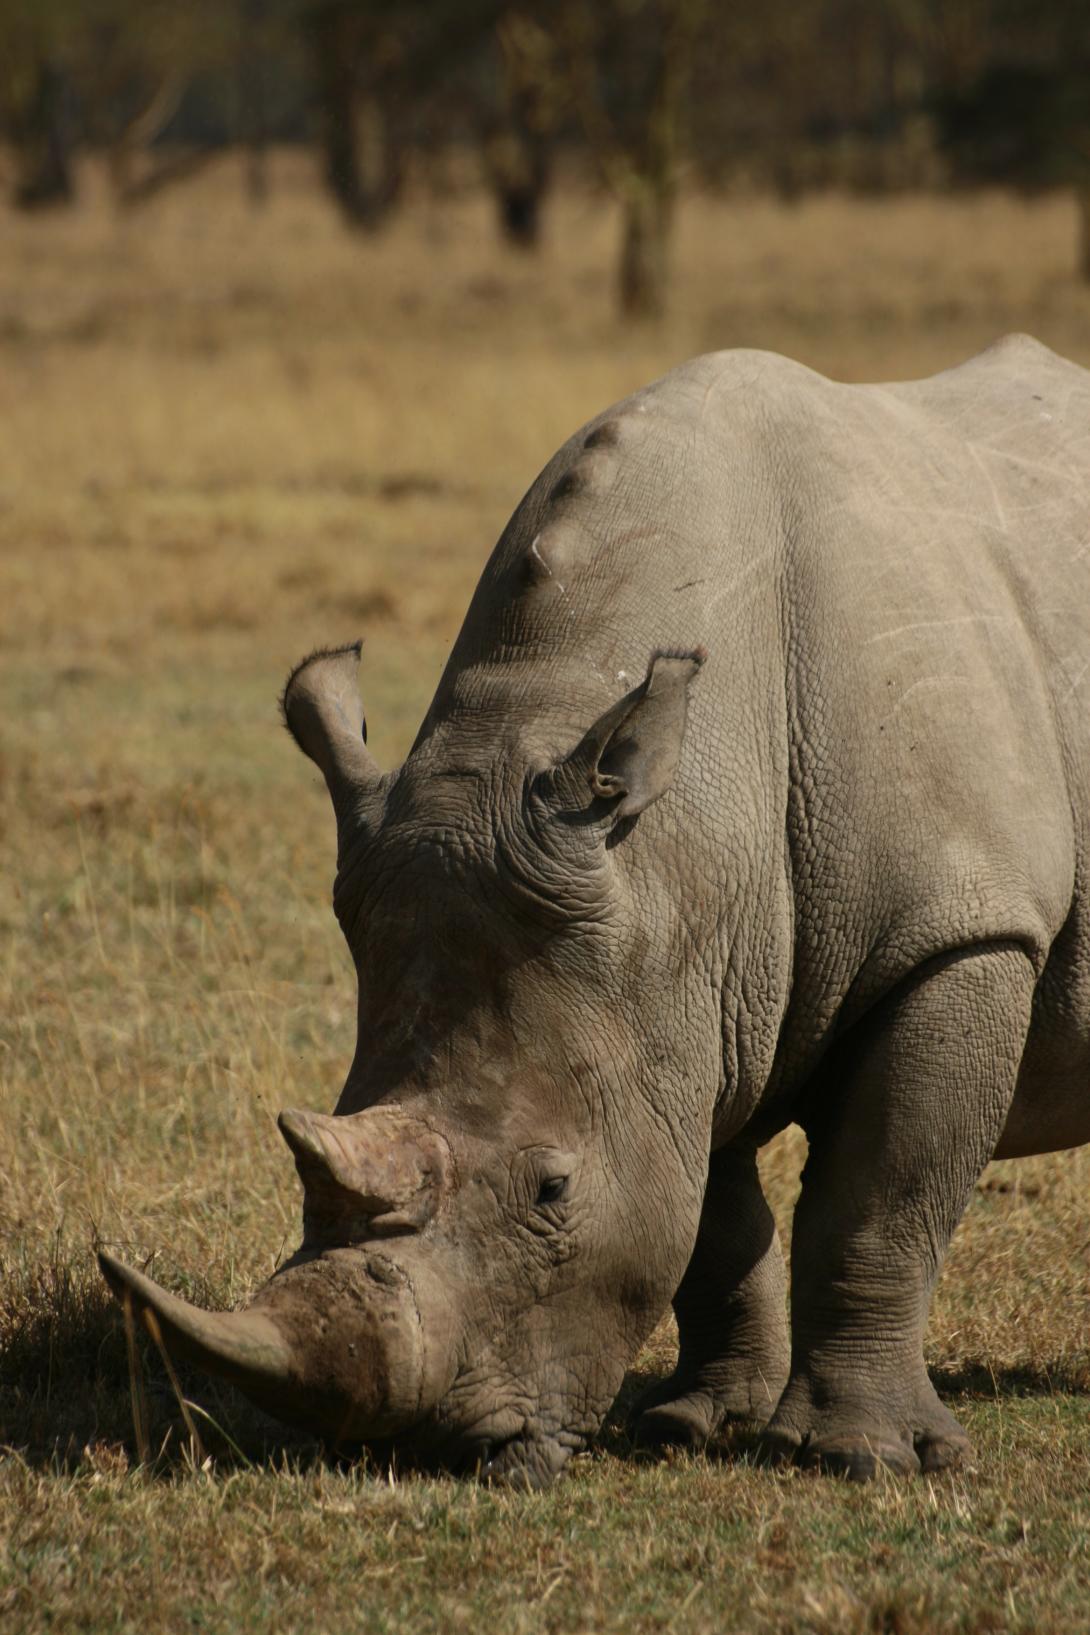 Wildlife volunteers can work with rhinos